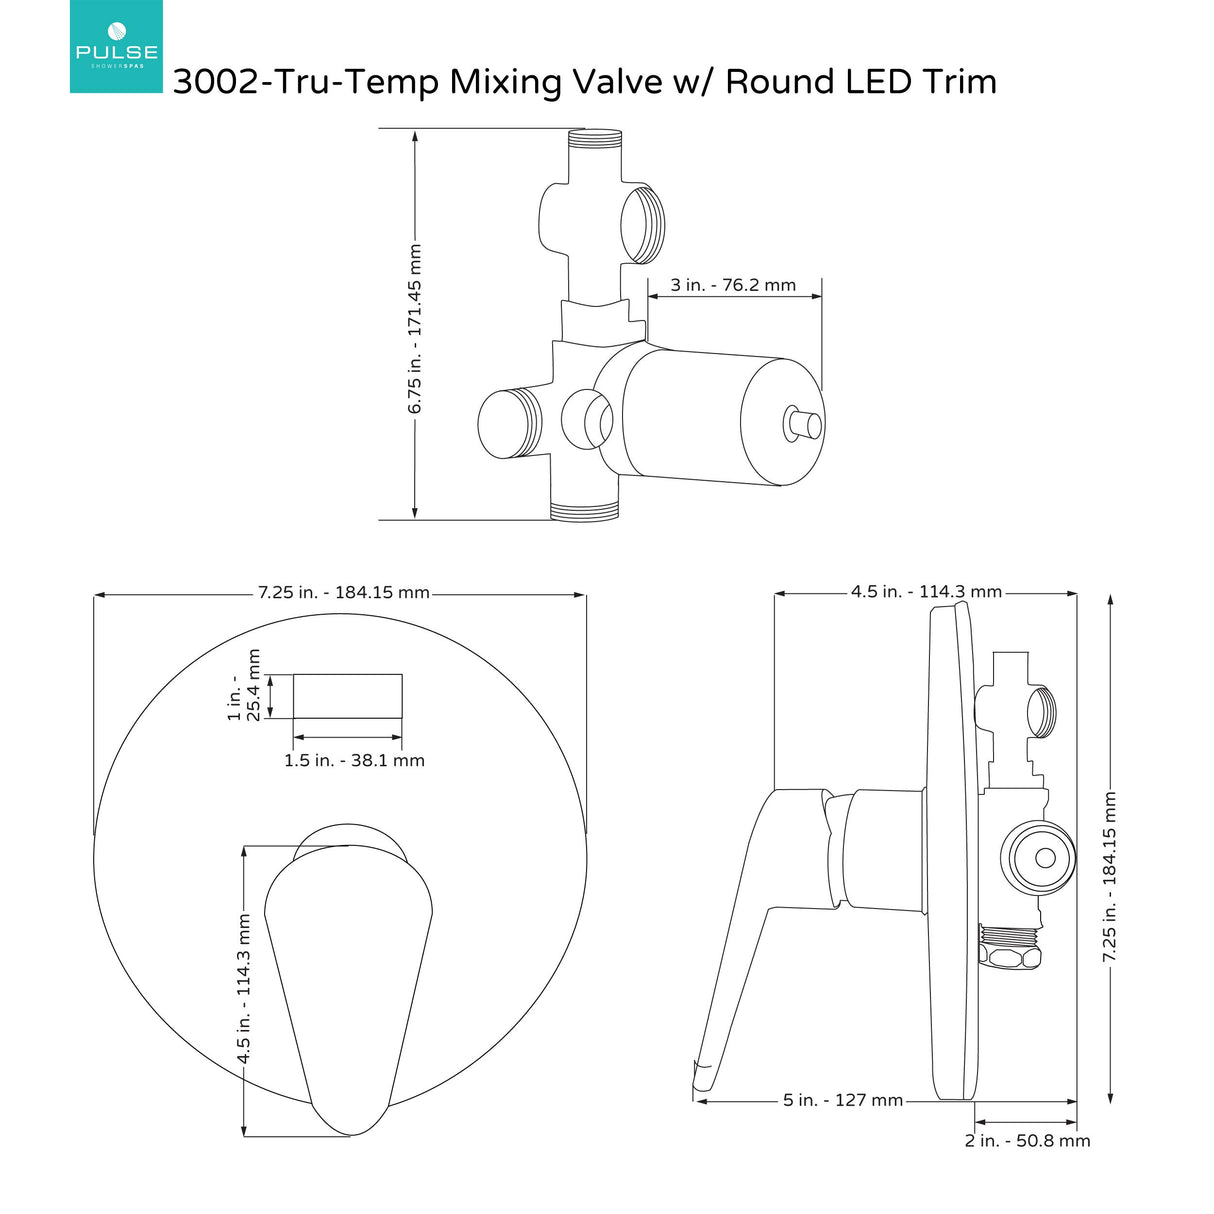 PULSE ShowerSpas 3002-RIV-PB-BN Tru-Temp Pressure Balance Rough-In Valve Trim Kit, LED Temperature Display, Round, 1/2" NPT, Brushed Nickel